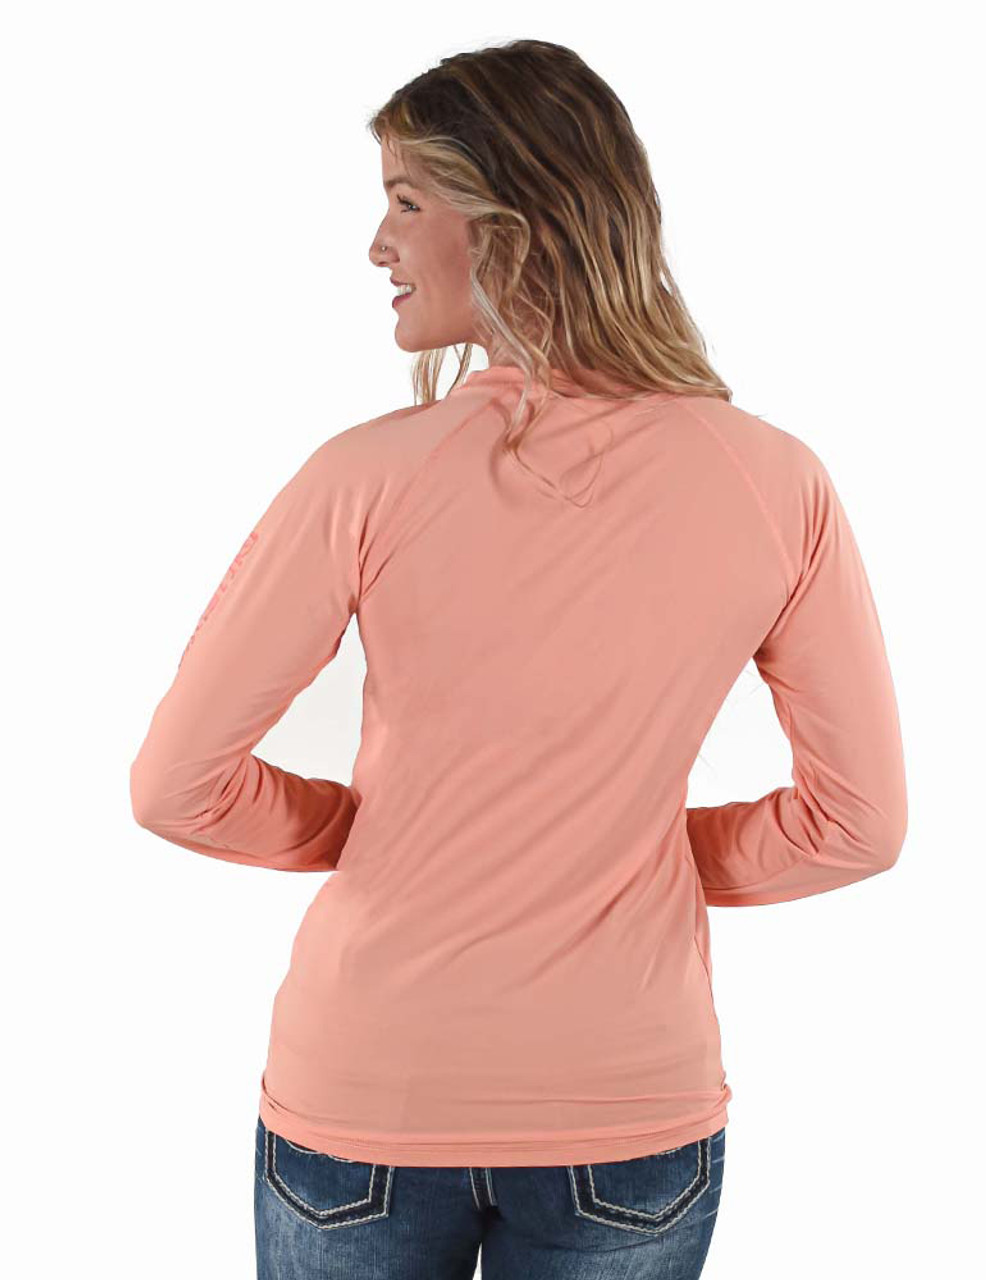 Long Sleeve Breathe Tee - Cowgirl Tuff Athletics (aqua with hot pink/coral  print) - Cowgirl Tuff Co. & B. Tuff Jeans